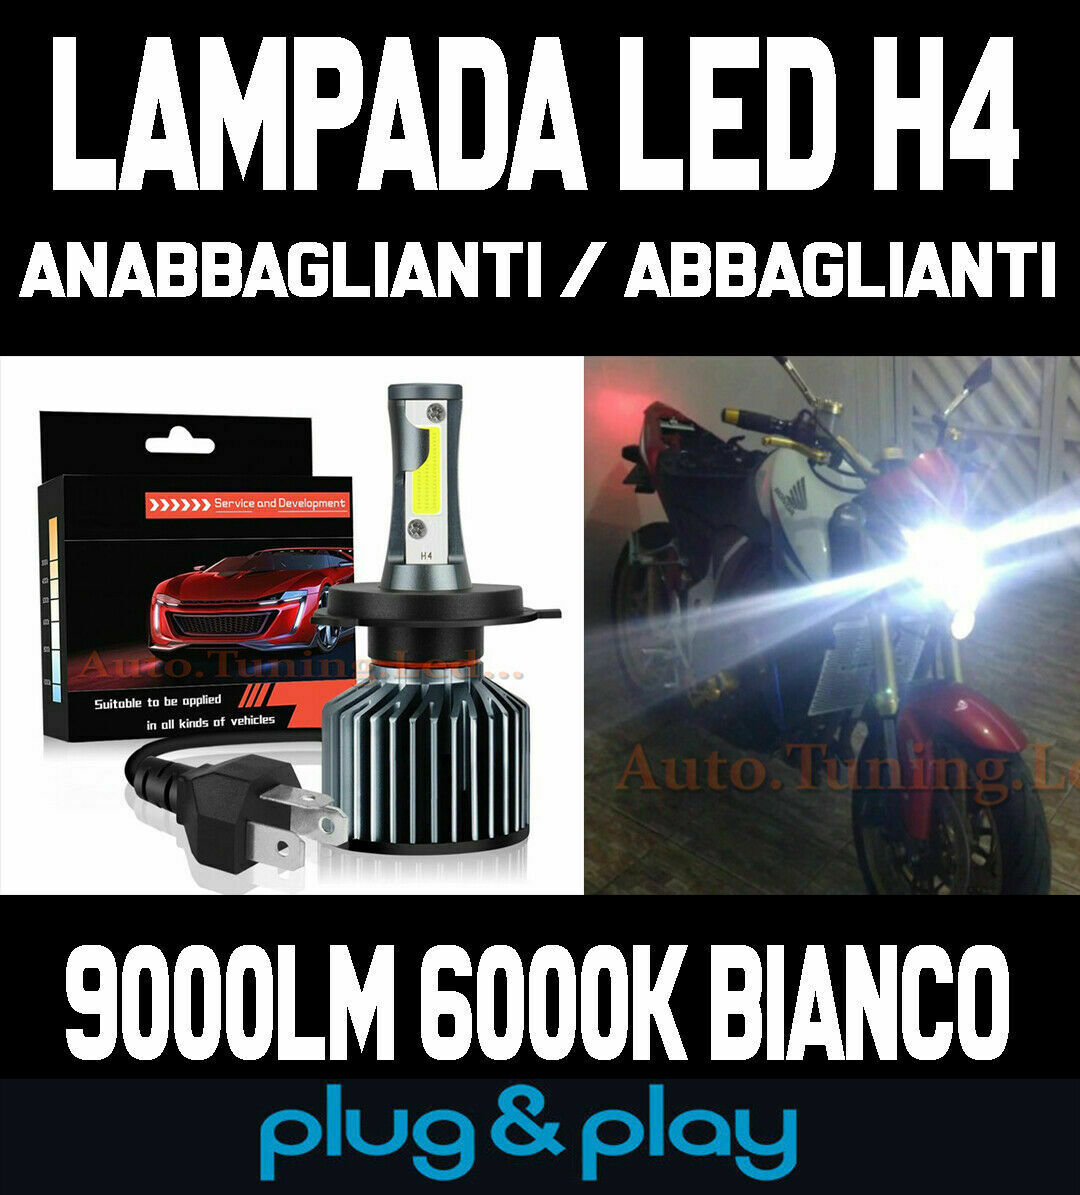 KTM STING 125 LC2 LAMPADA LED H4 6000K CANBUS 9000LM ANABBAGLIANTI / ABBAGLIANTI